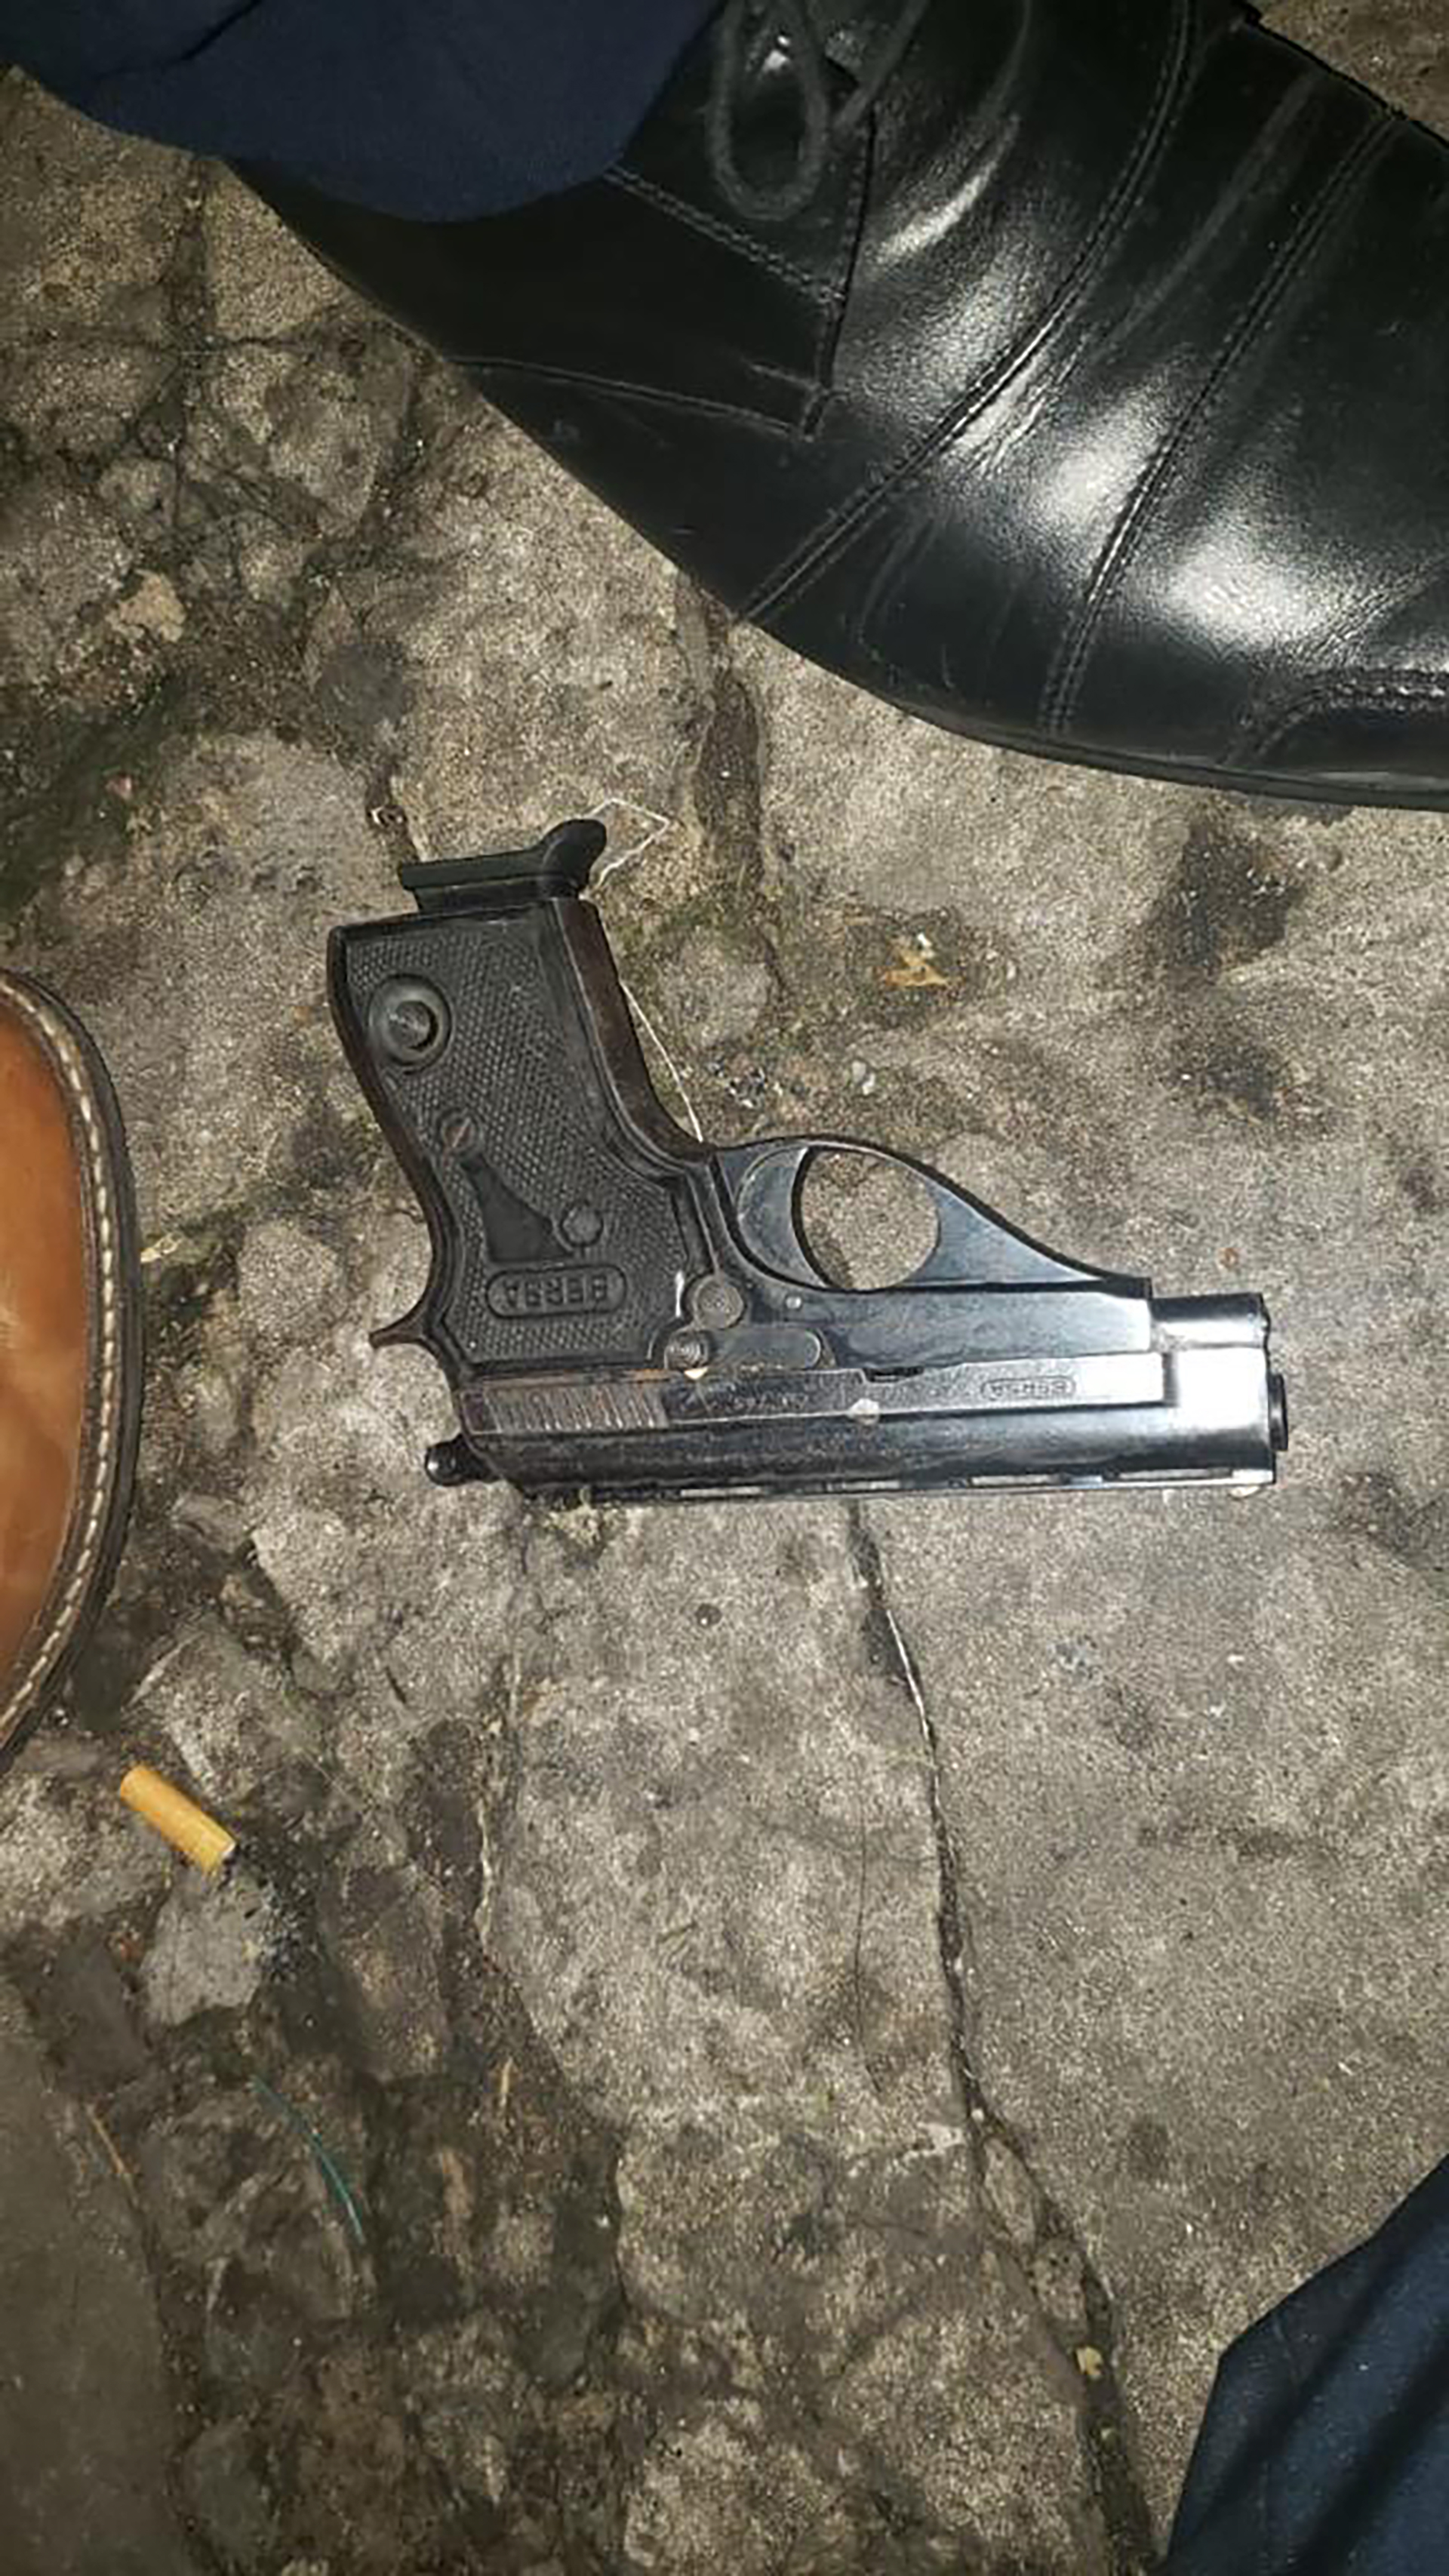 El arma con la que intentaron dispararle a Cristina Kirchner